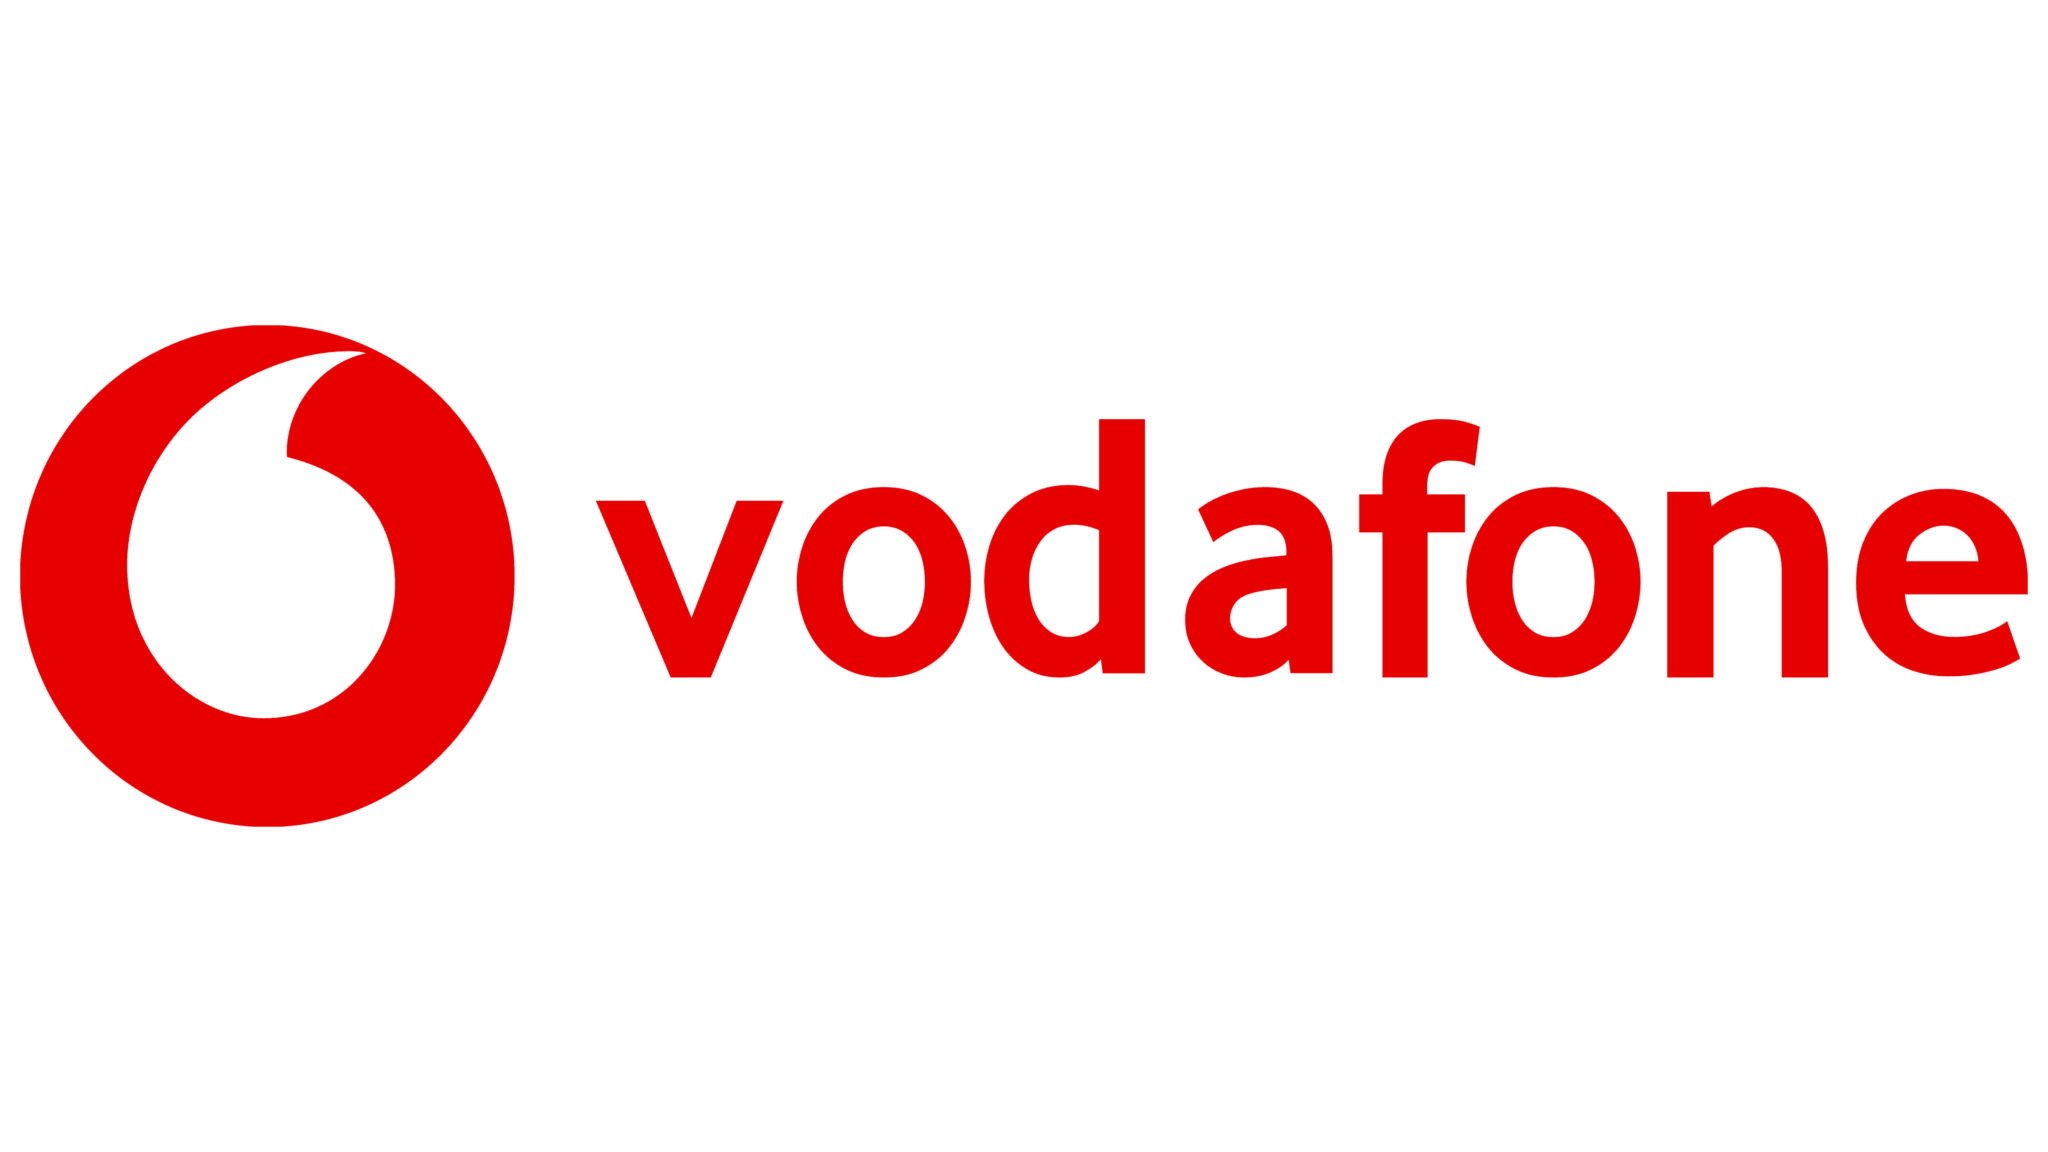 Vodafone-Emblem-2048x1152